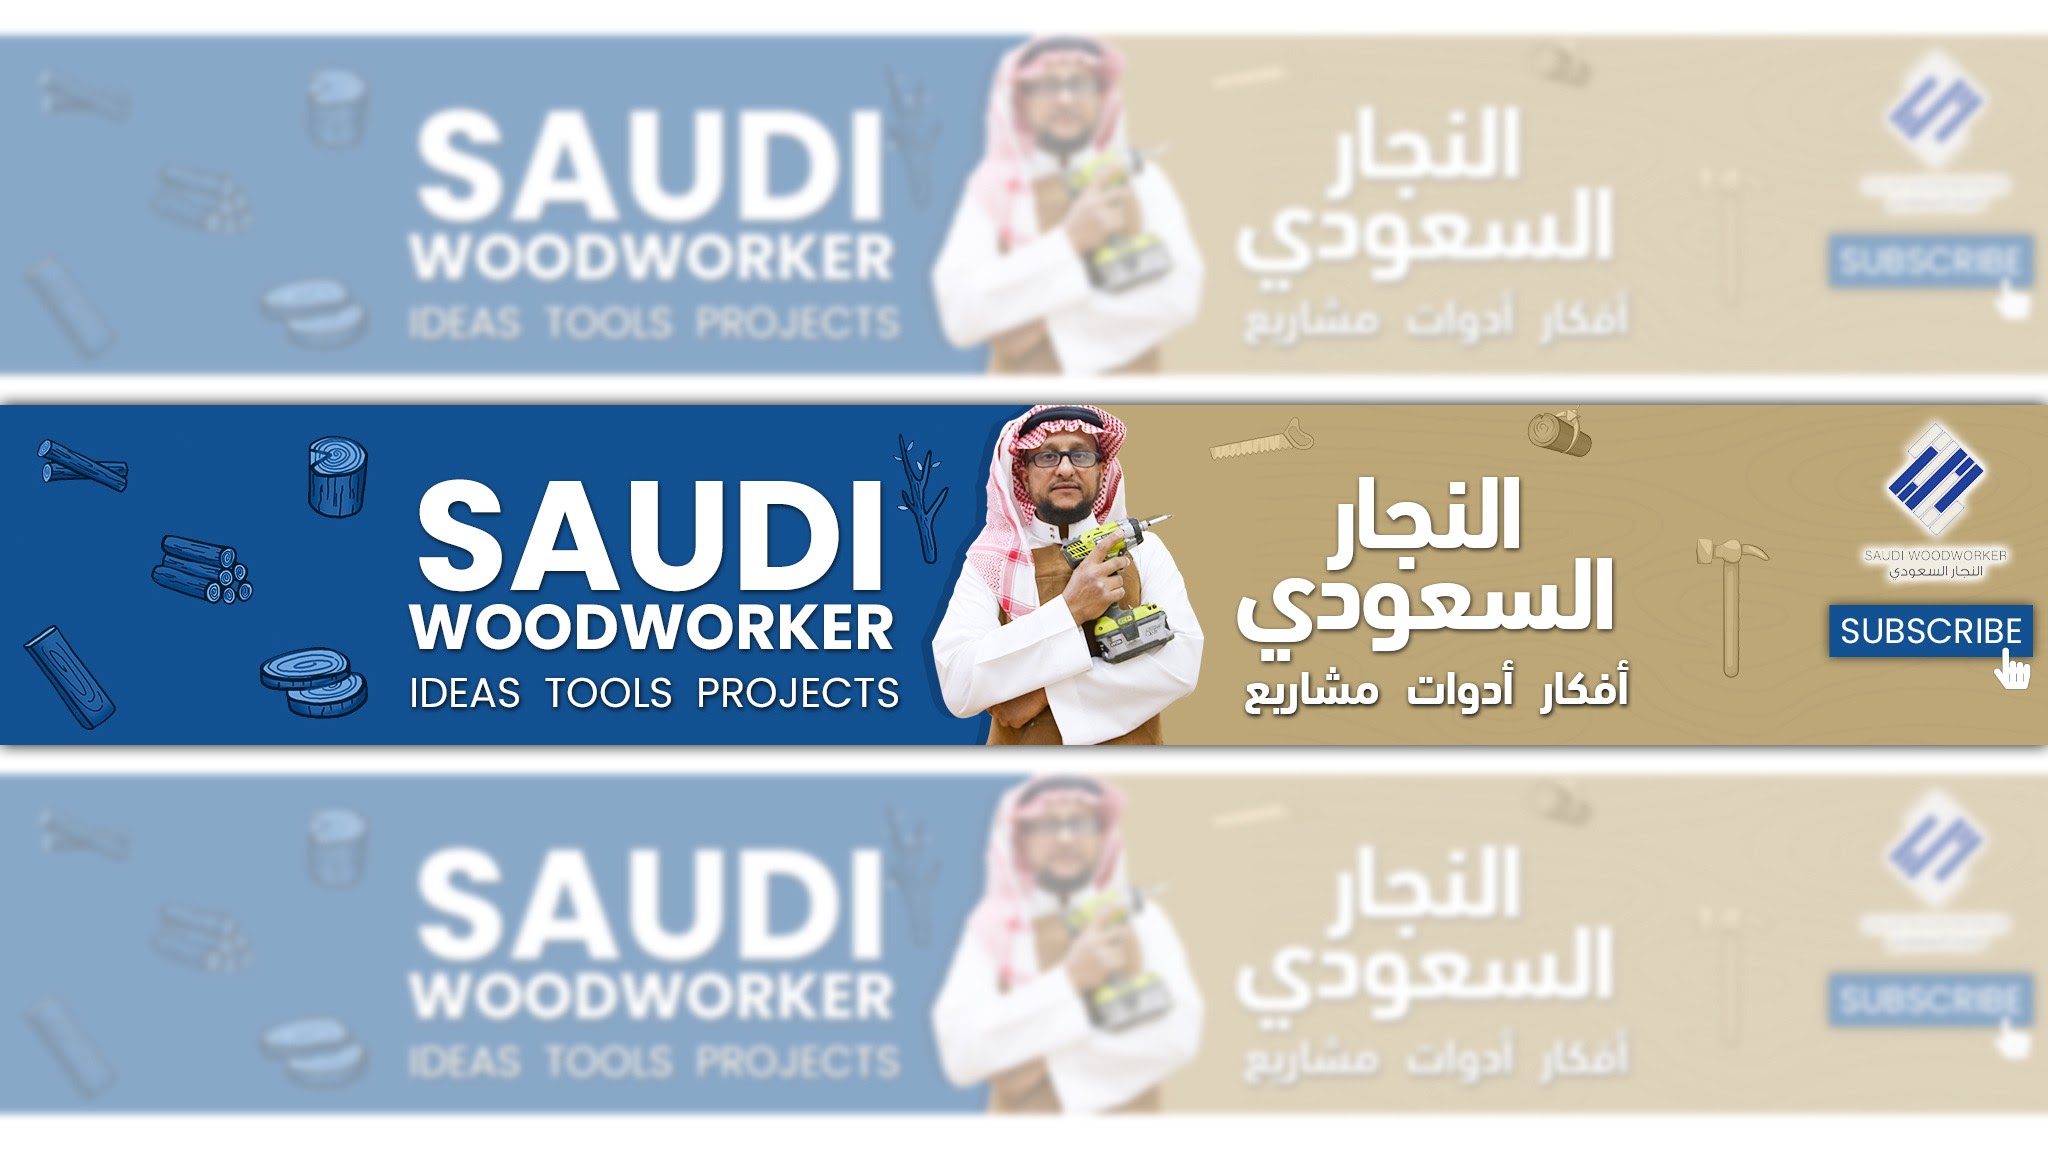 Saudi Woodworker